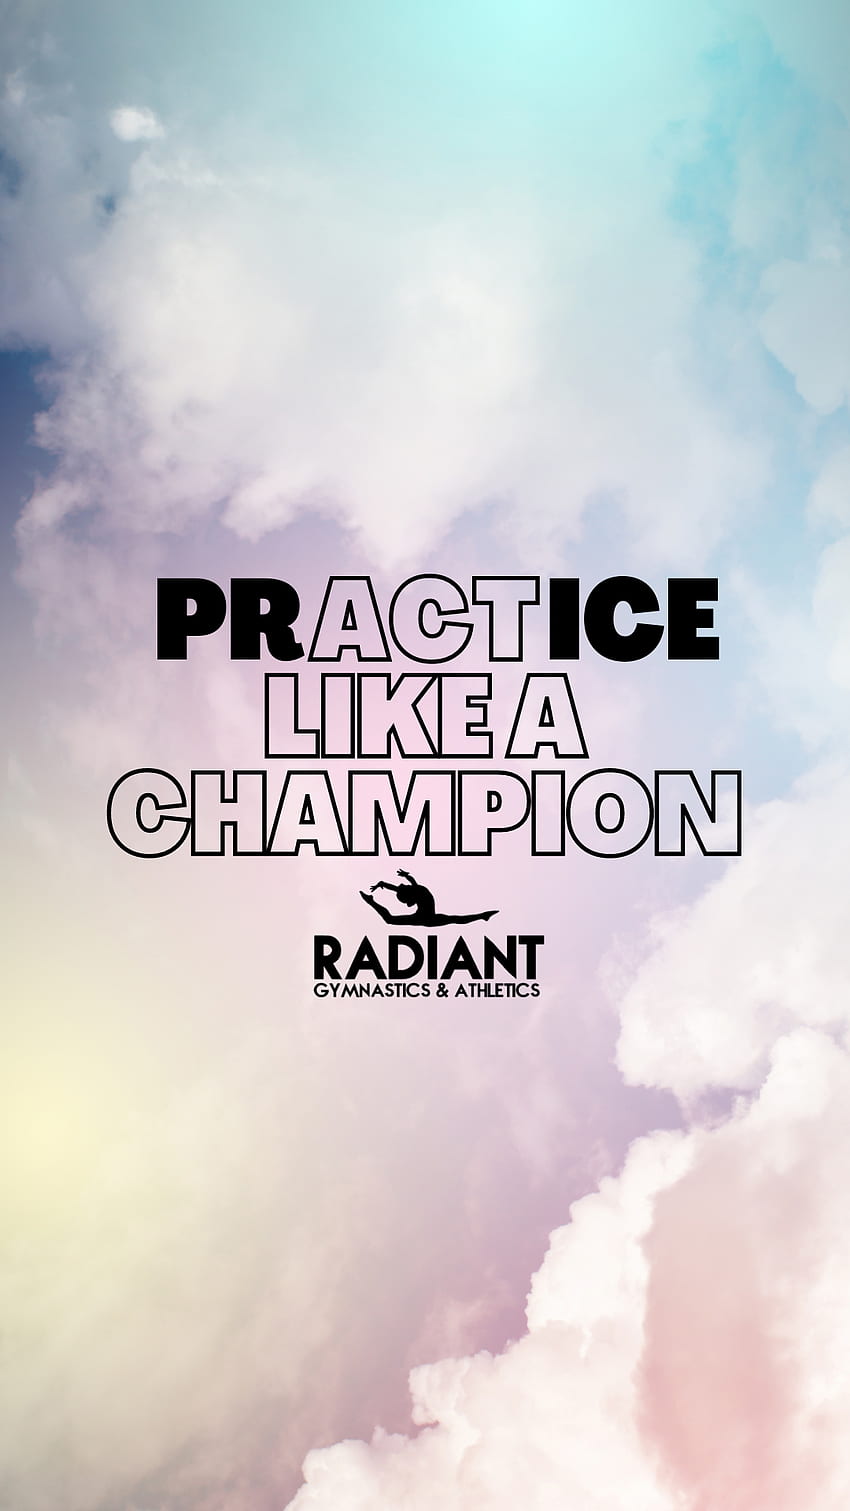 Practice like a champion. - Gymnastics